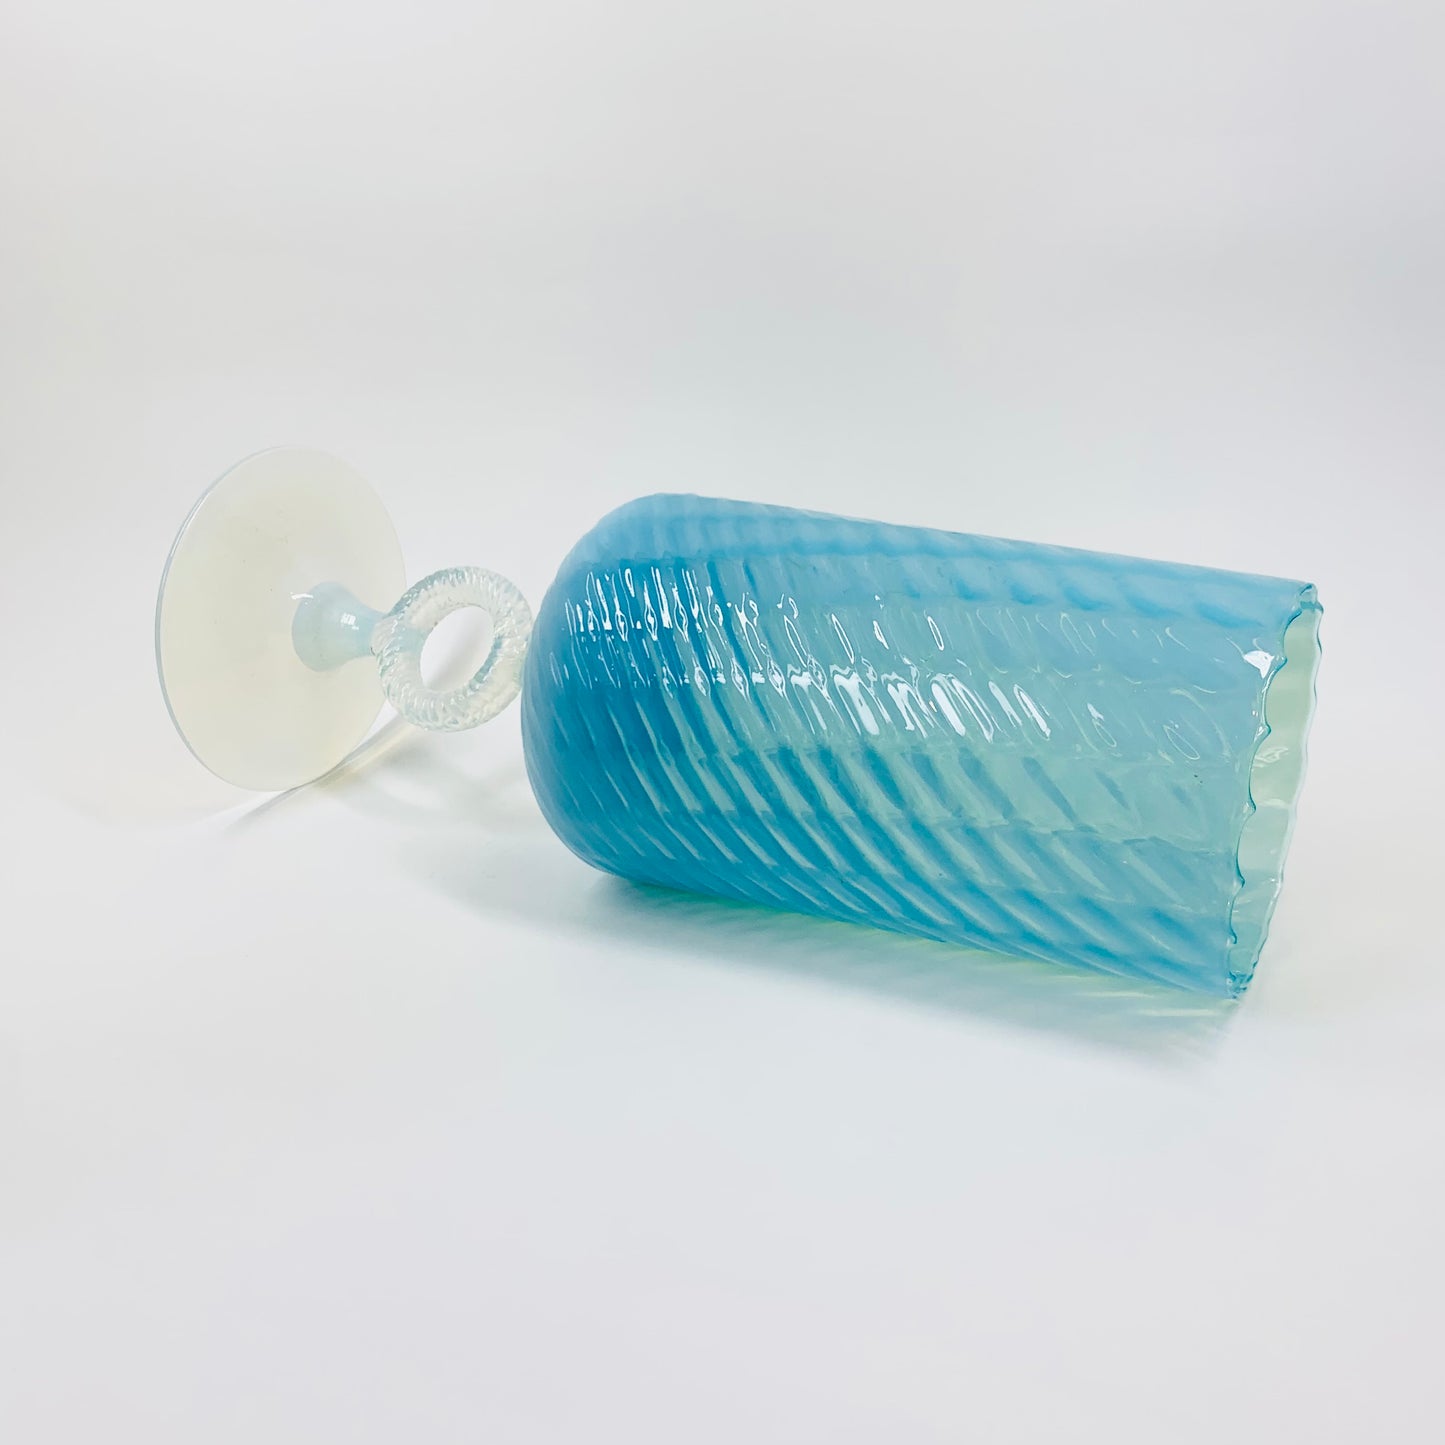 MURANO OPALESCENT GLASS GOBLET